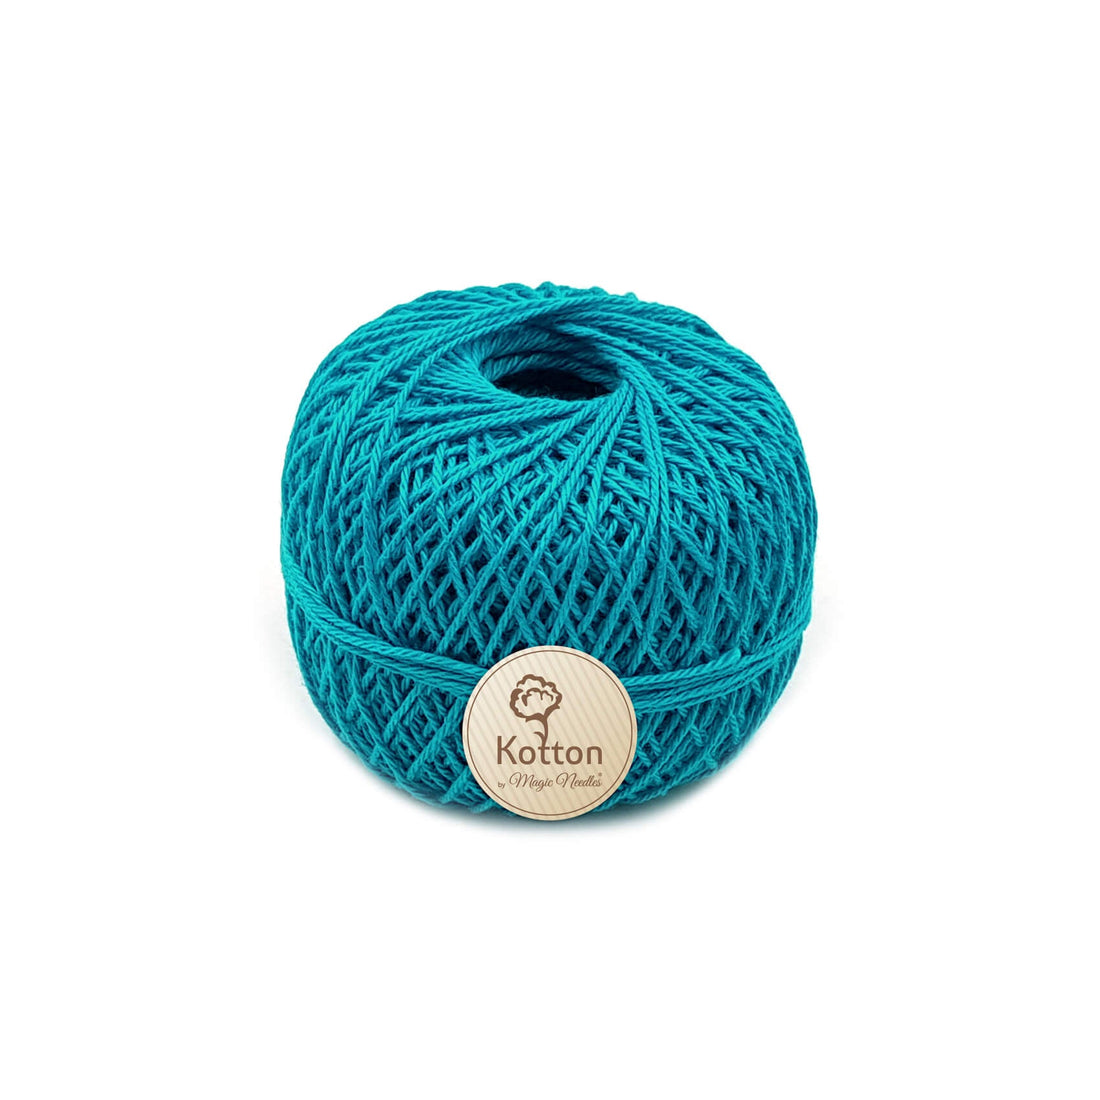 Kotton 3 ply Mercerised Cotton Yarn - Turquoise 15